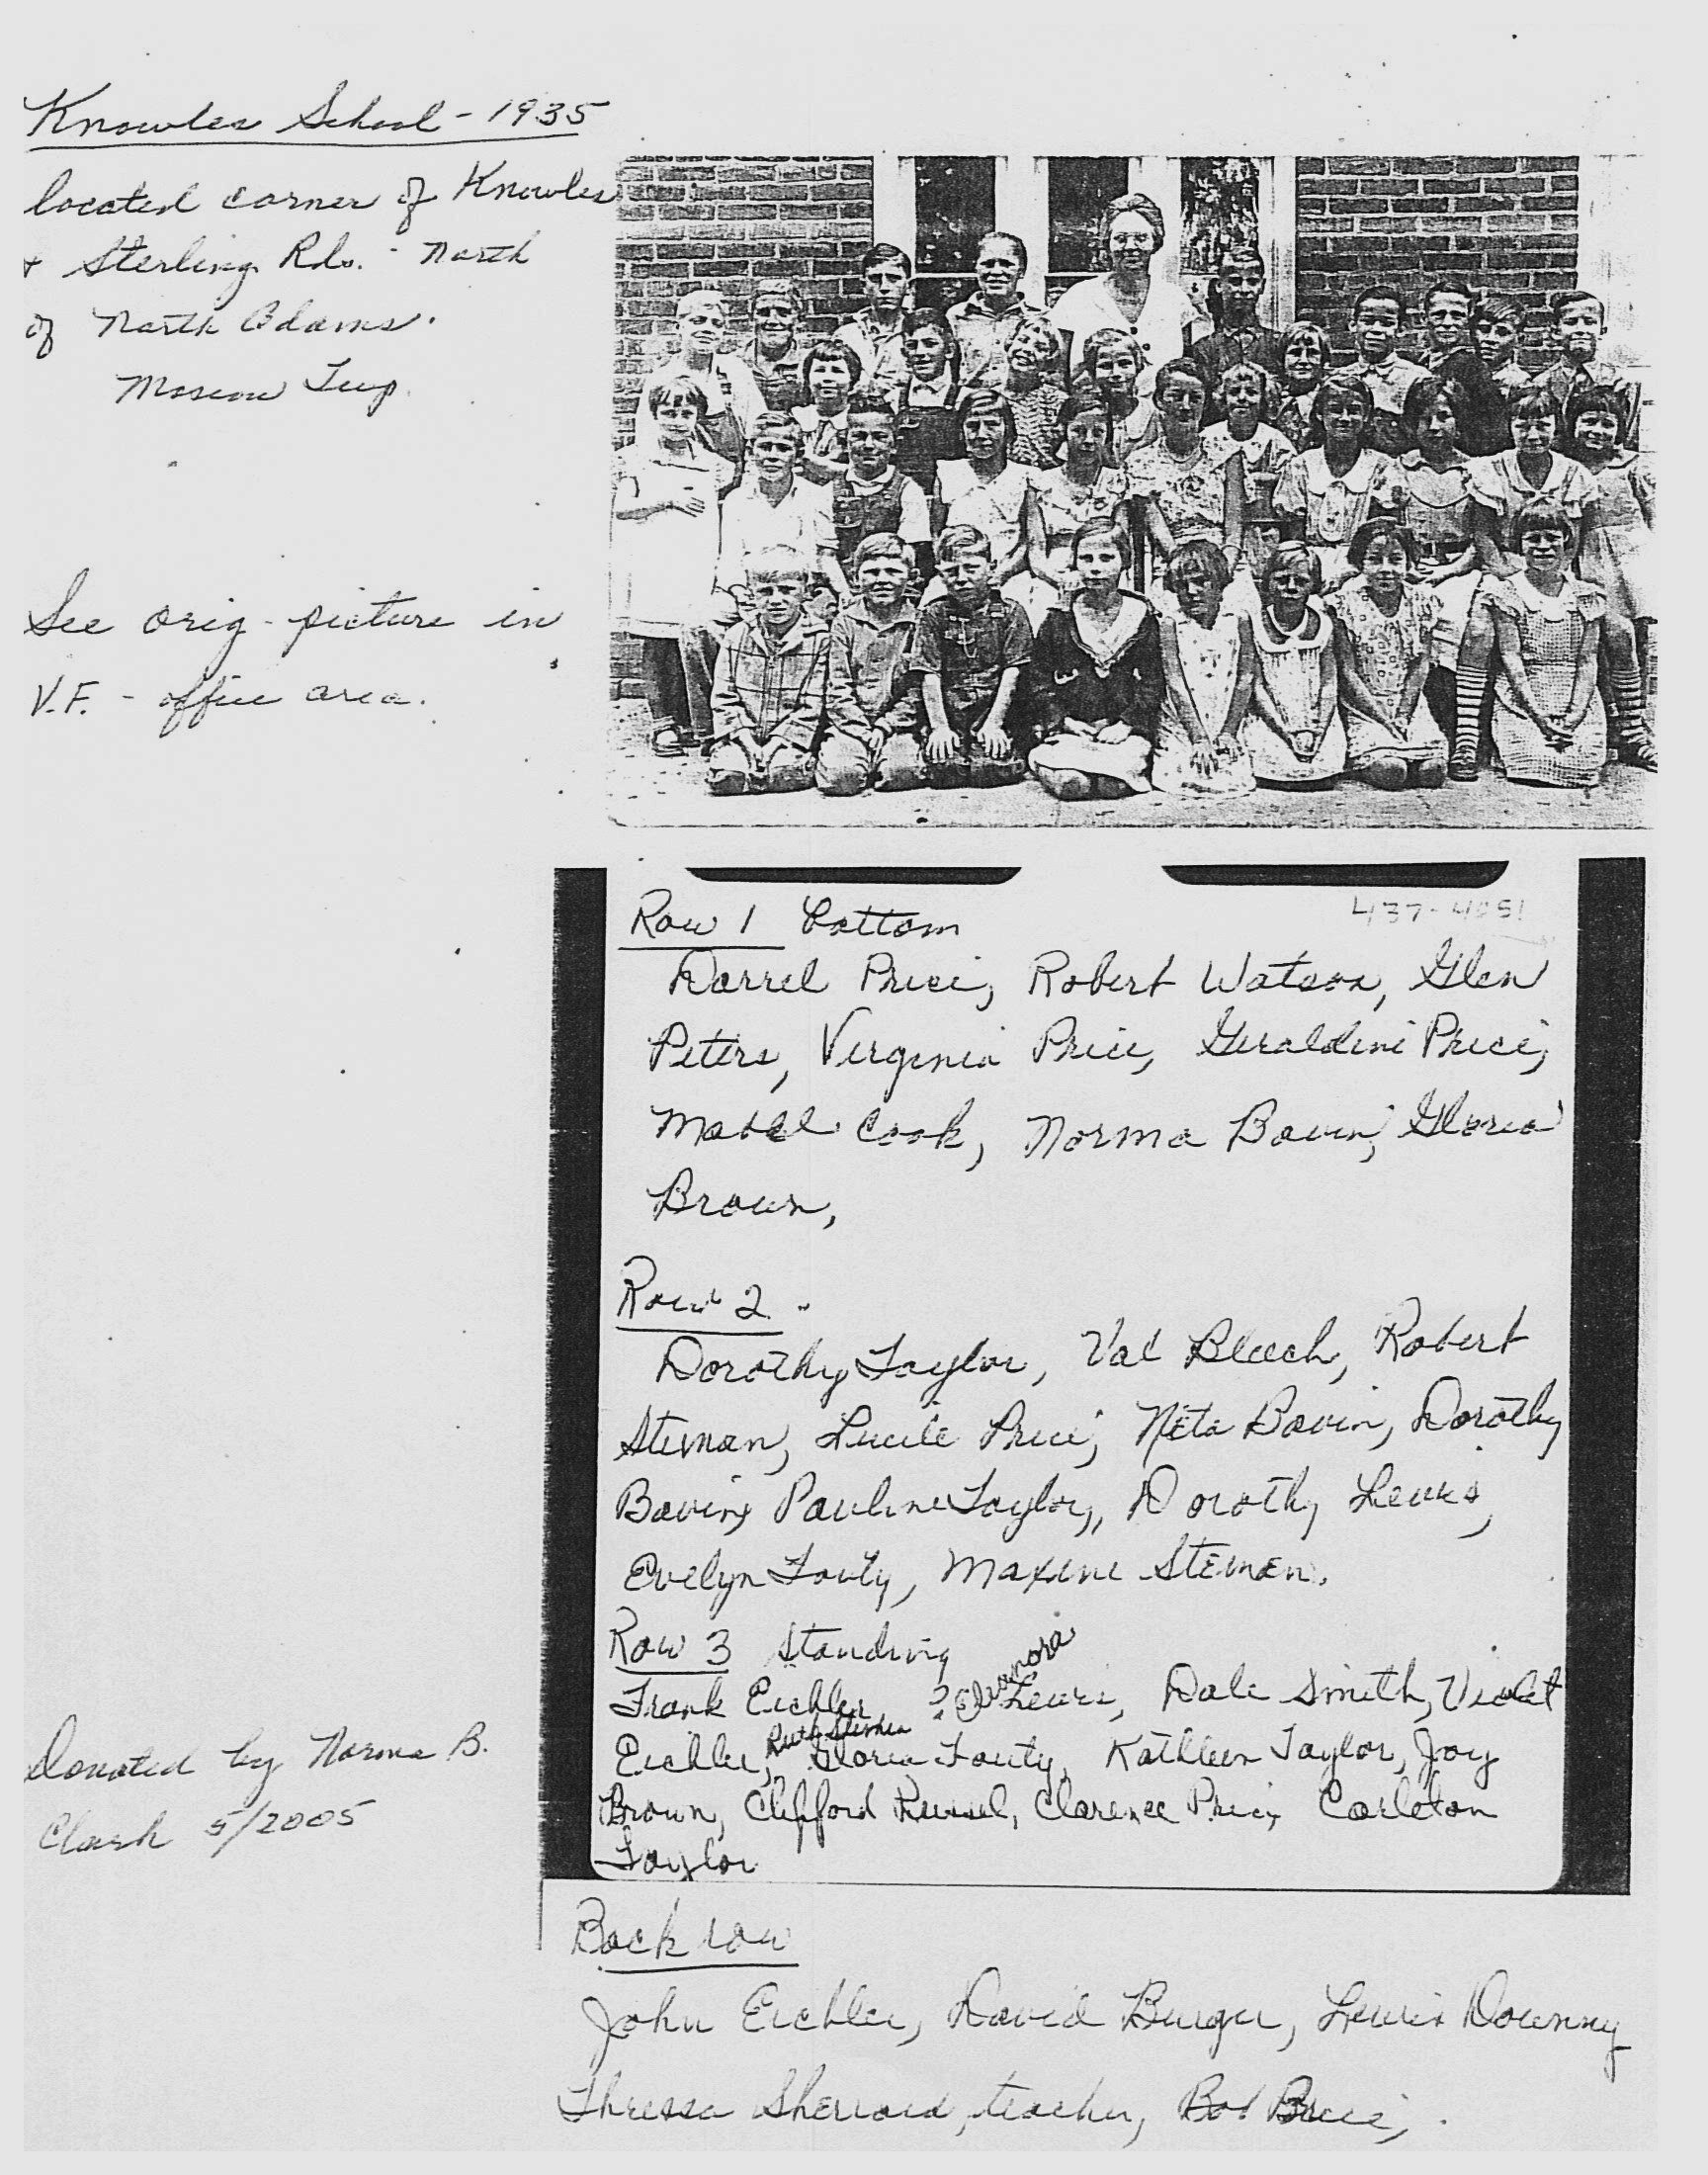 Knowles School 1930 with names.jpg